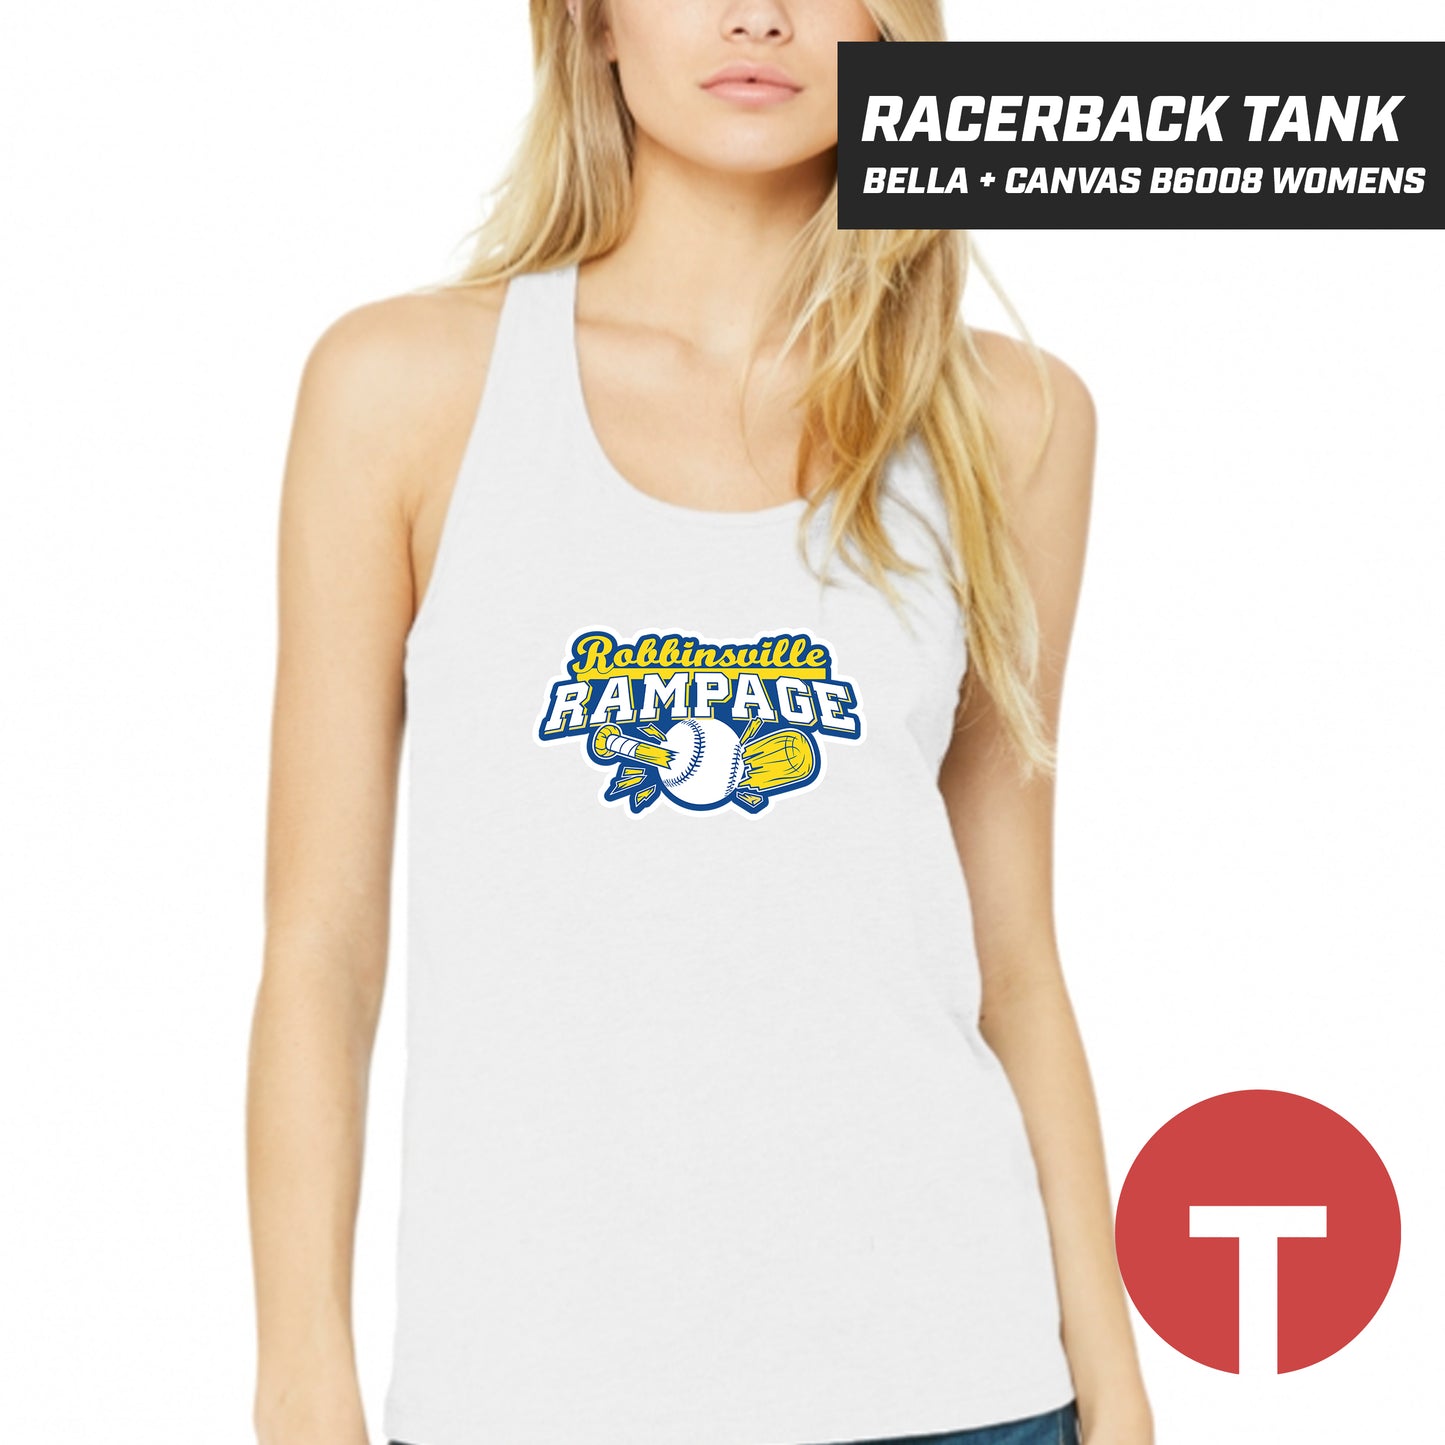 Robbinsville Rampage - Bella + Canvas B6008 Women's Jersey Racerback Tank